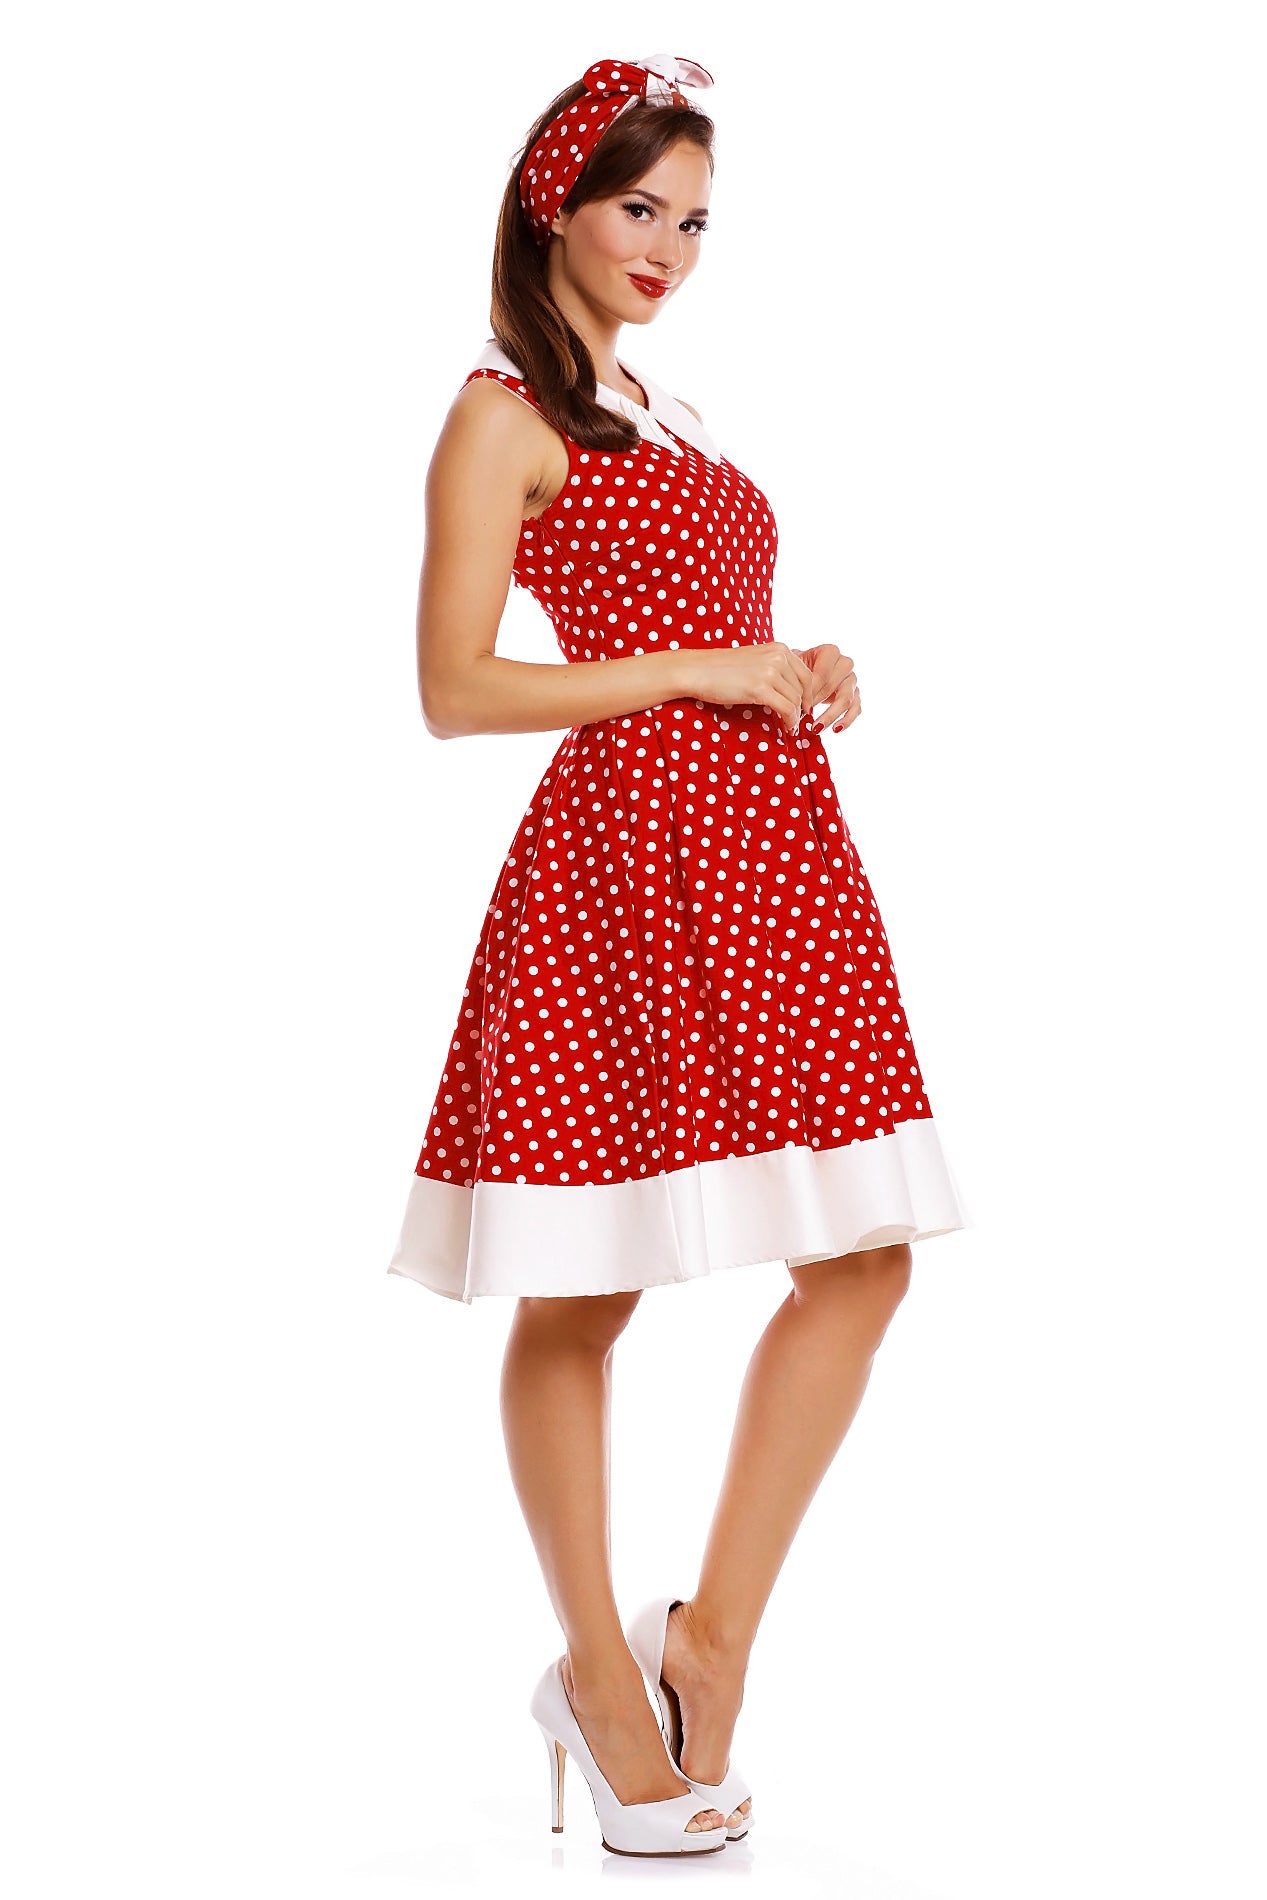 Vintage Inspired Swing Dress in Red Polka Dot